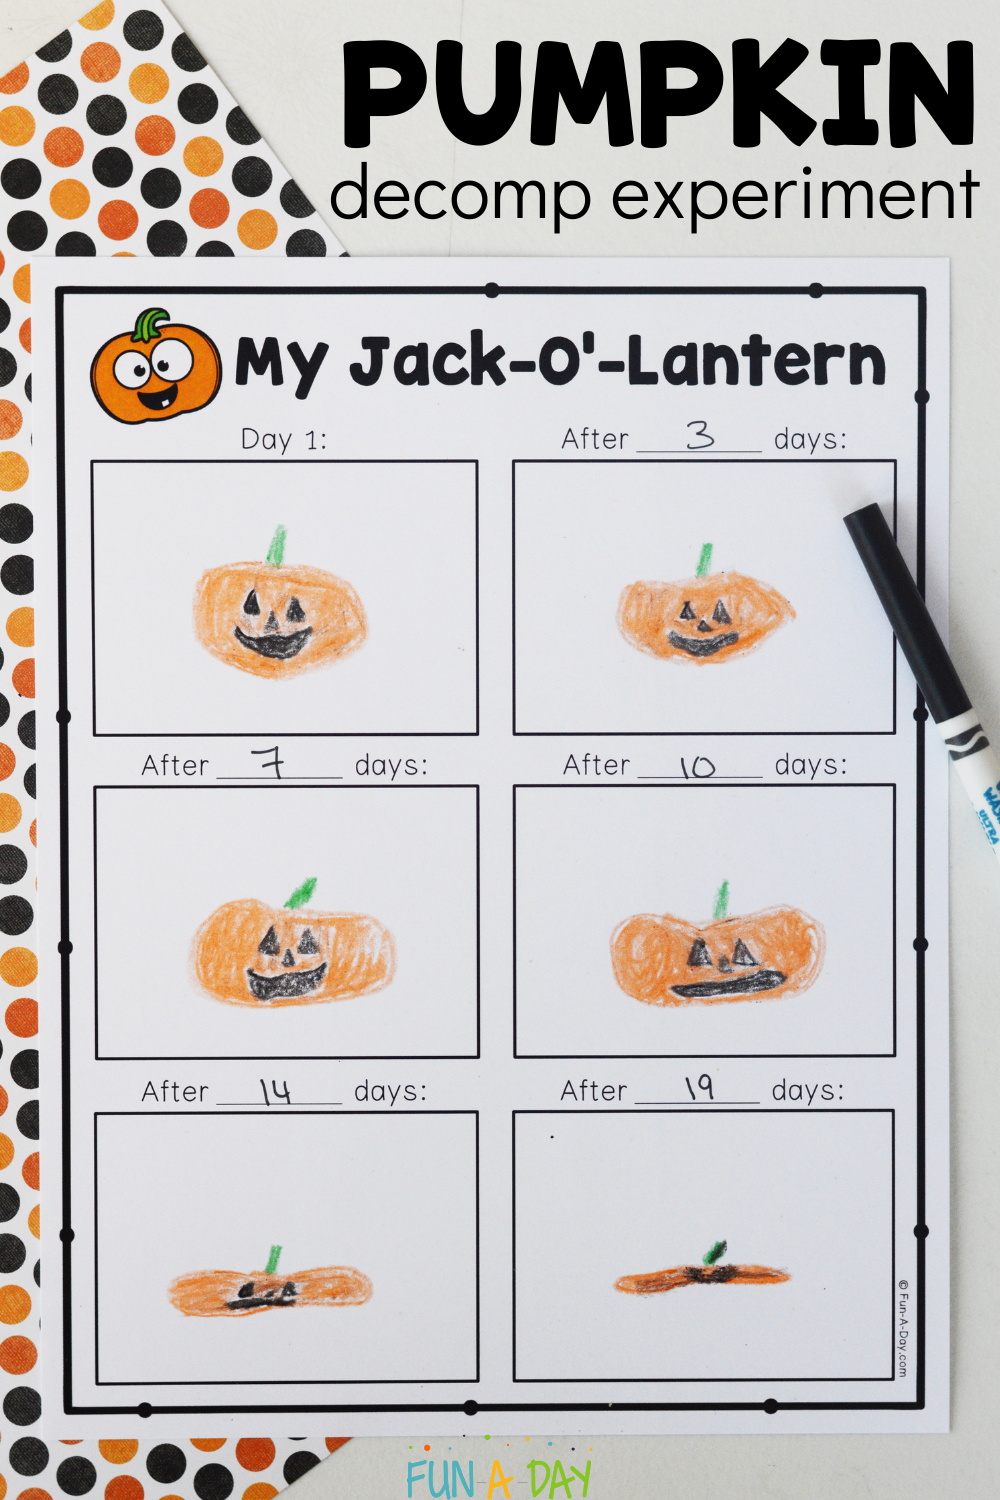 "My Jack O' Lantern" pumpkin decomposition recording sheet with text that reads pumpkin decomp experiment